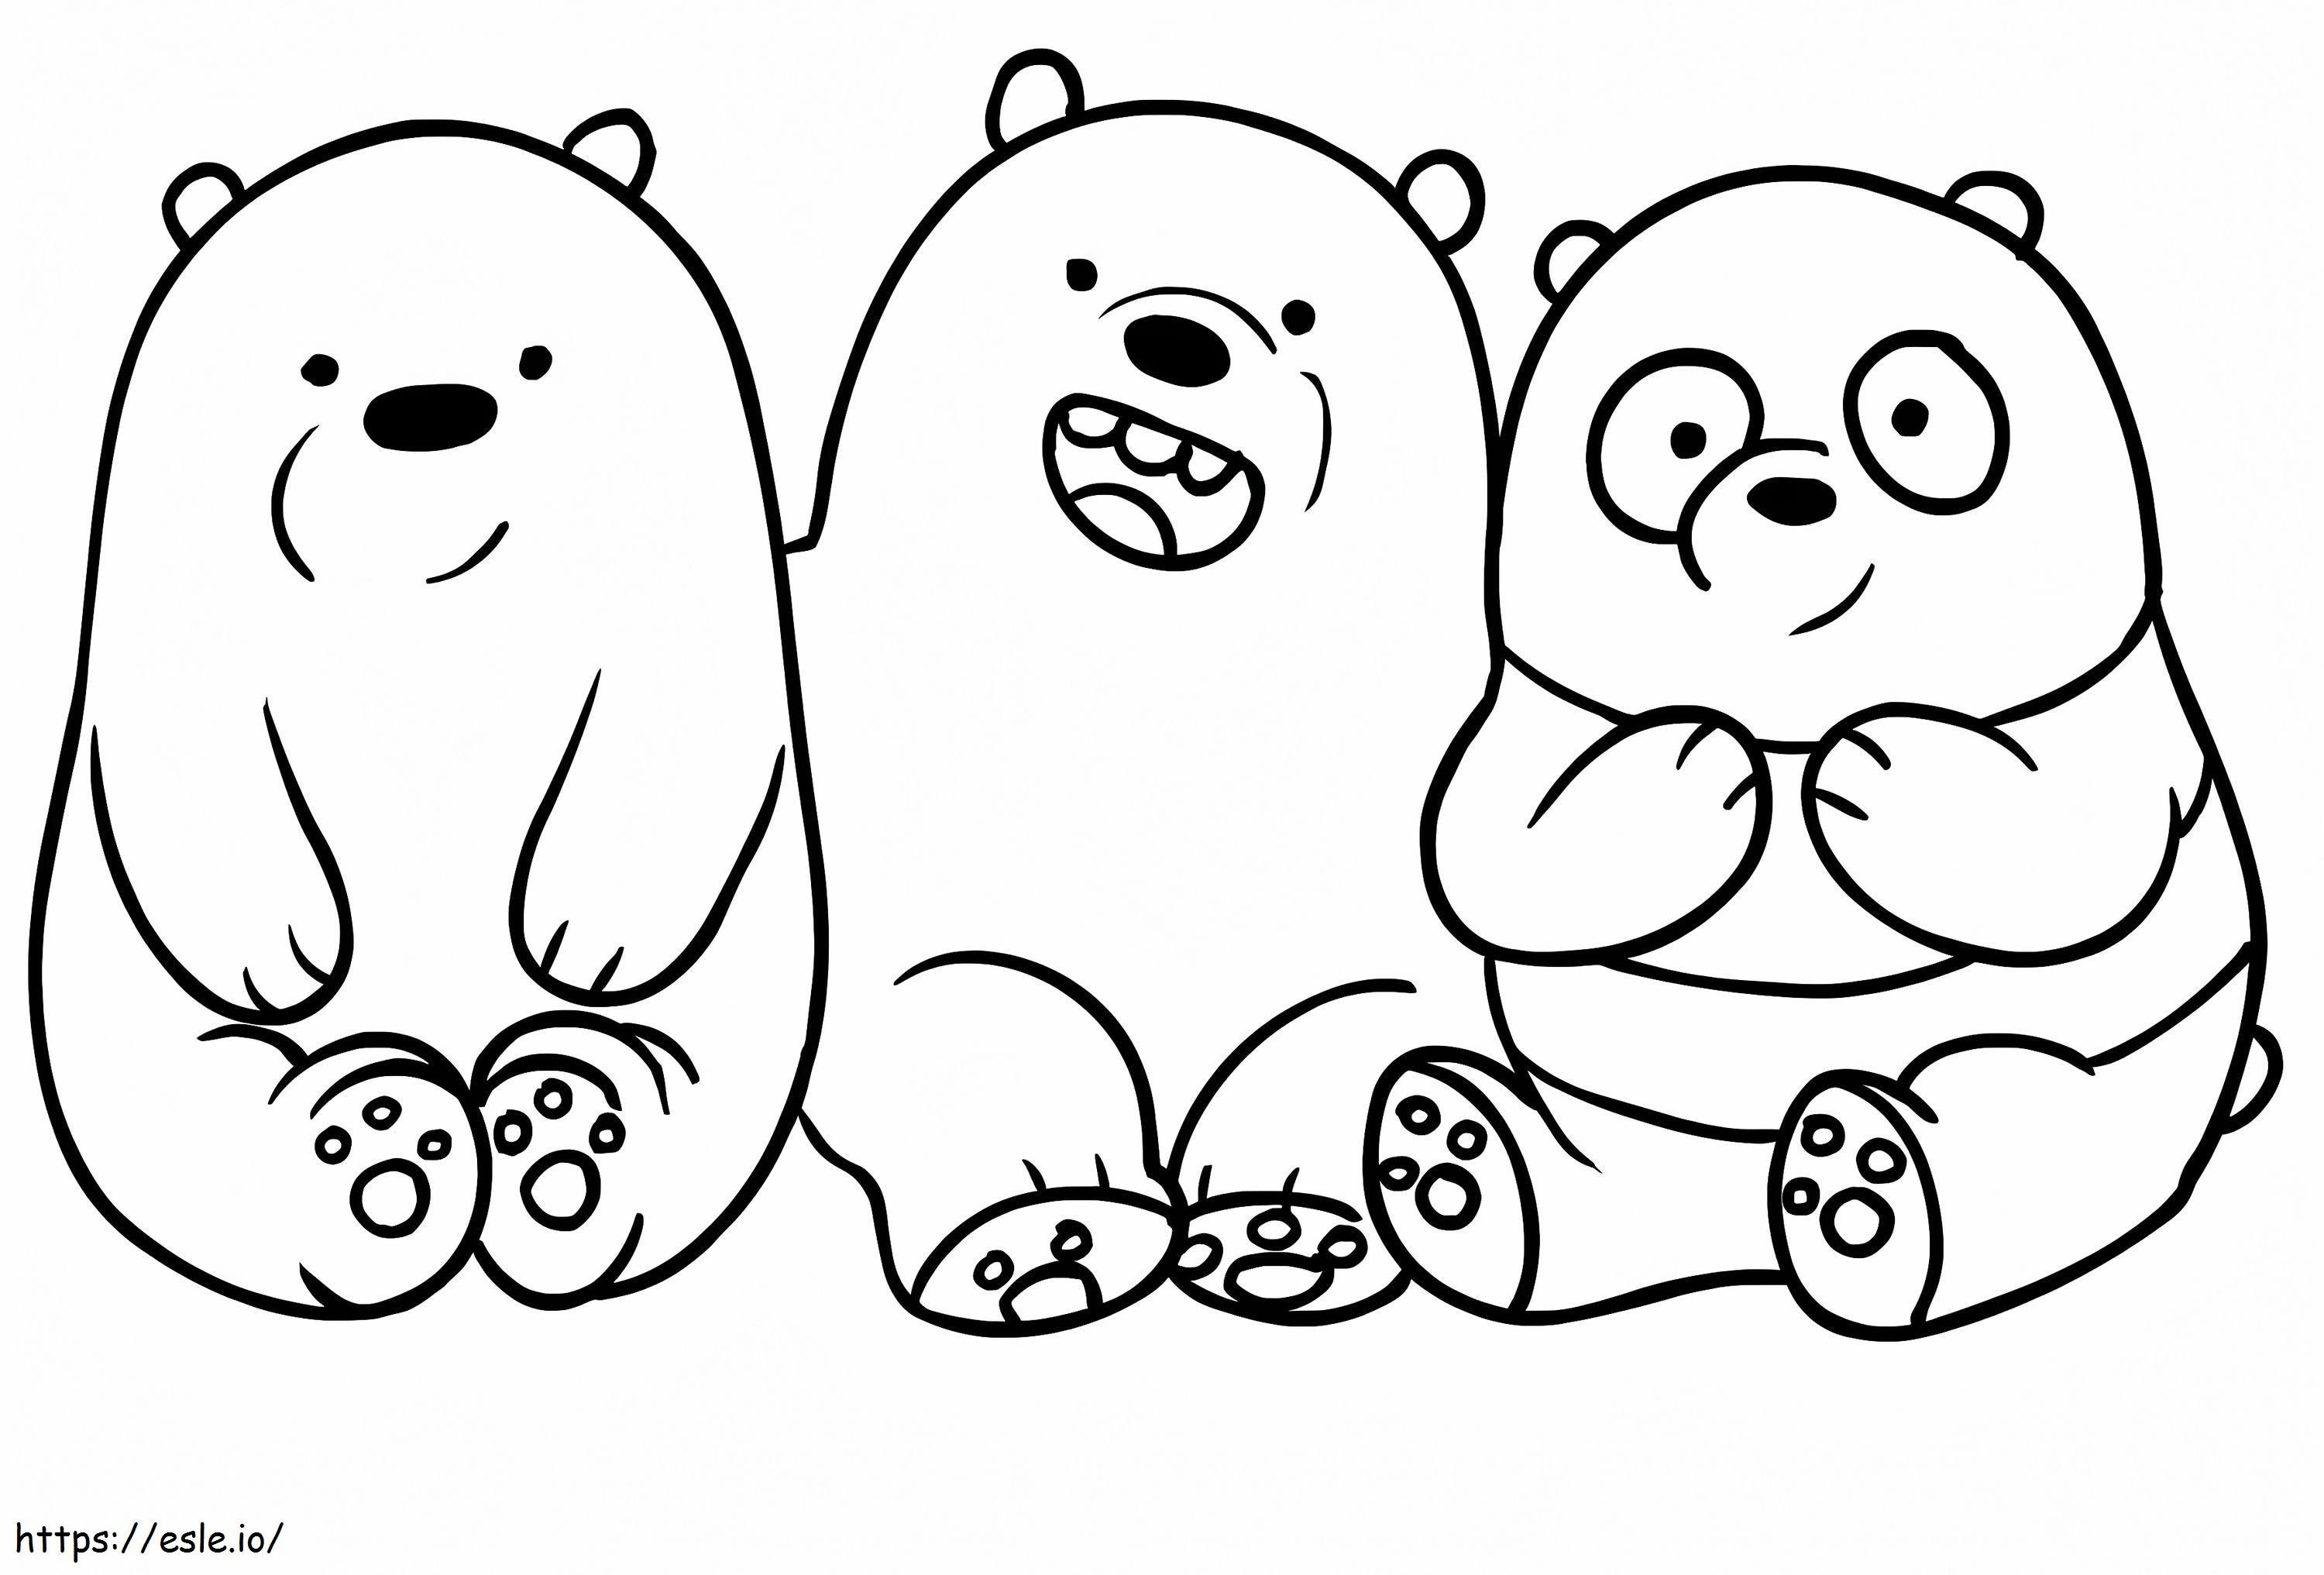 Tiga Beruang Duduk Gambar Mewarnai